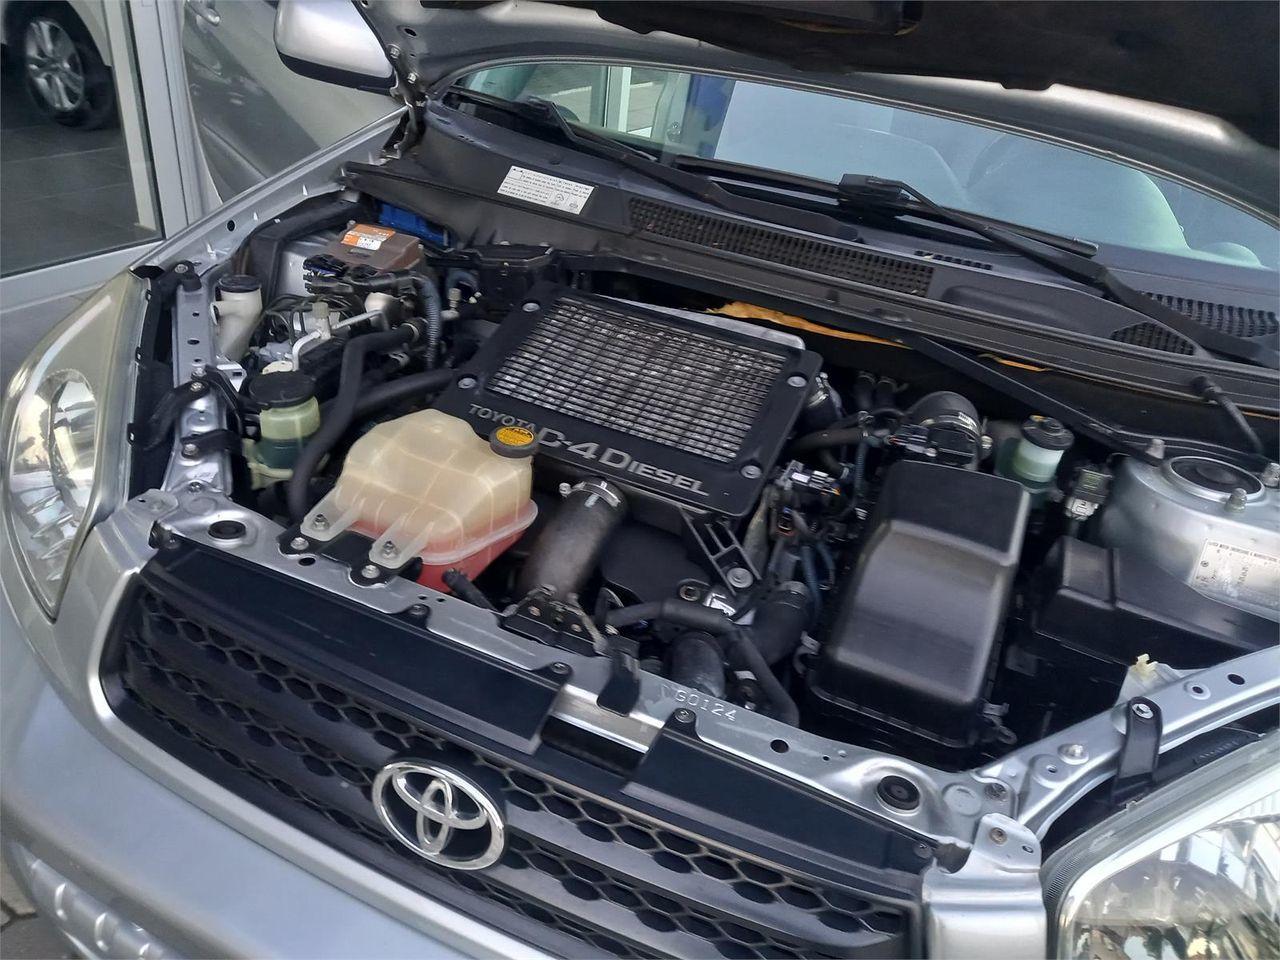 Toyota RAV 4 2.0 D-4D 4x4 3 PORTE * MAI PERCORSO FUORISTRADA *